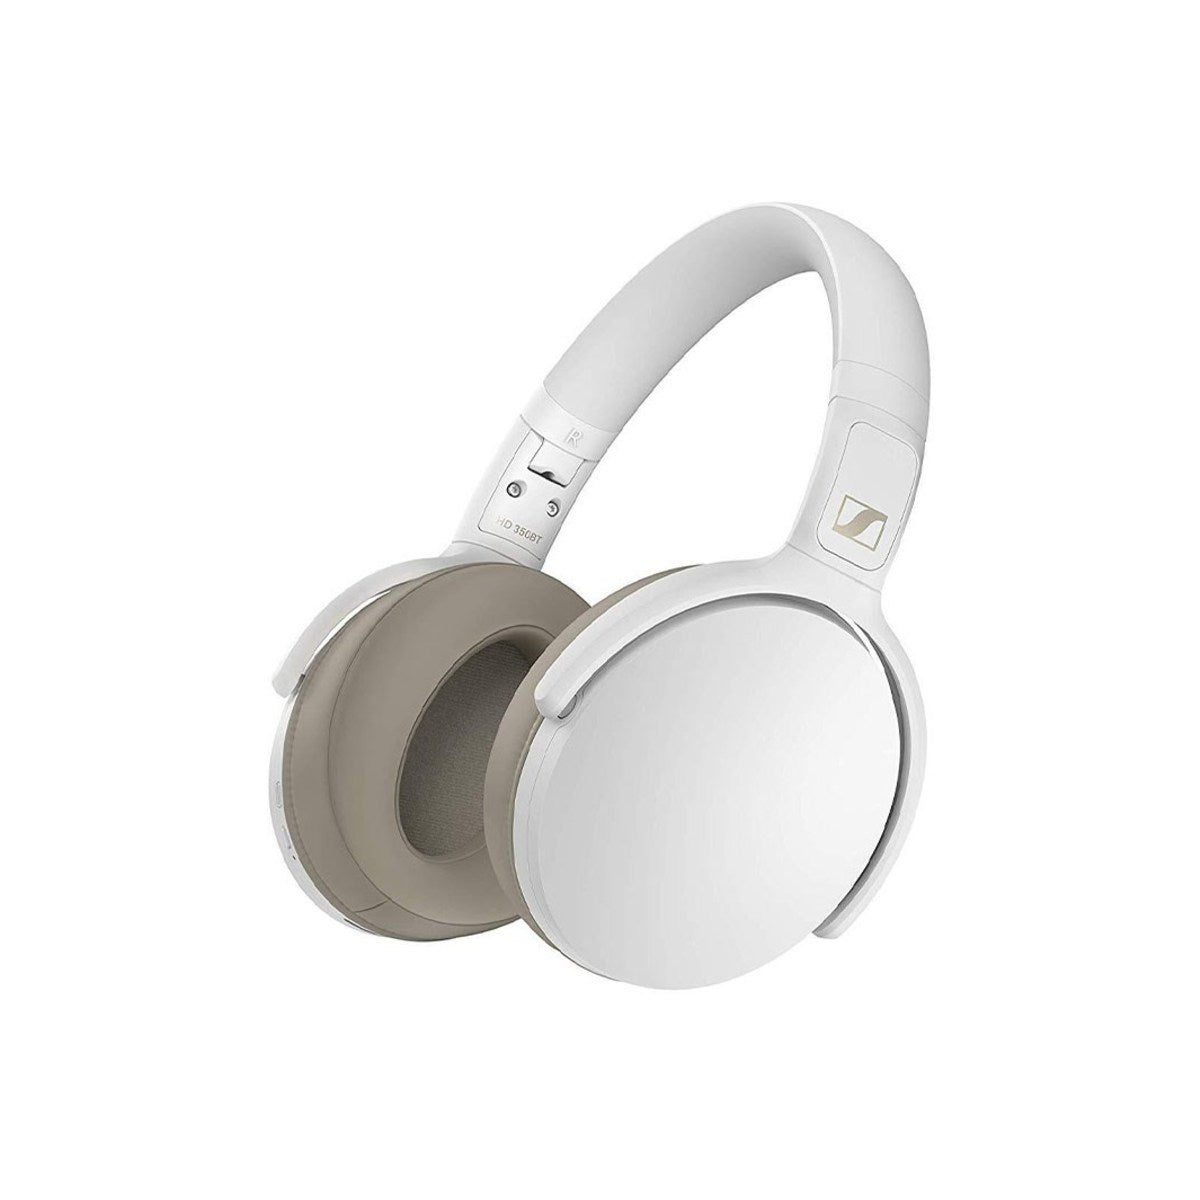 Sennheiser HD 350BT Bluetooth Wireless Around Ear Headphones.